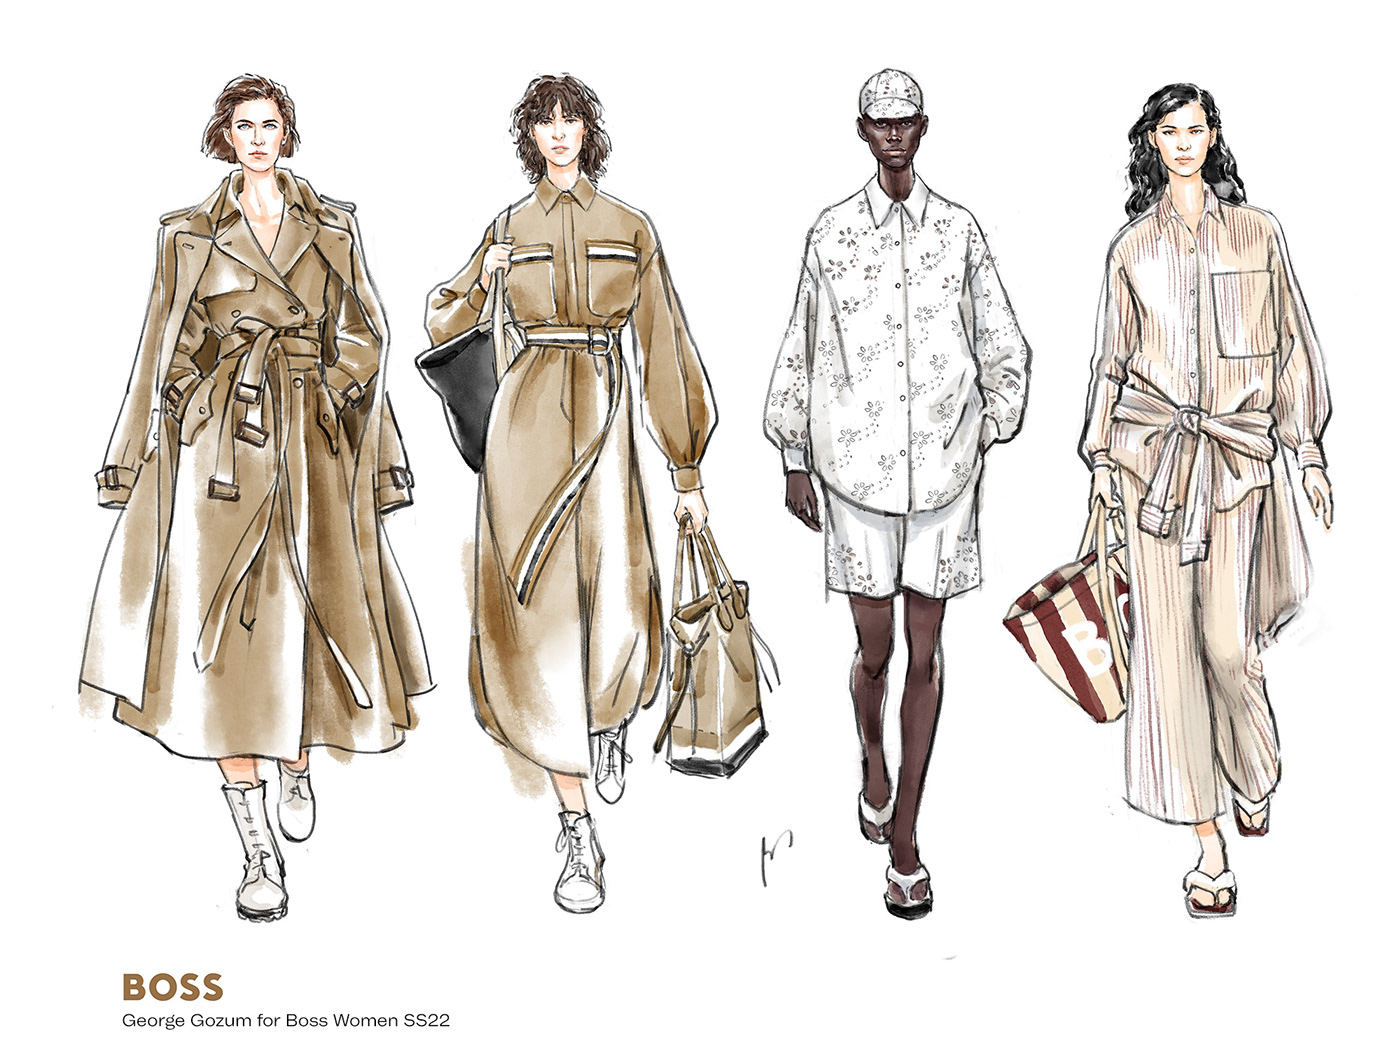 Fashion illustrations by George Gozum for Hugo Boss
